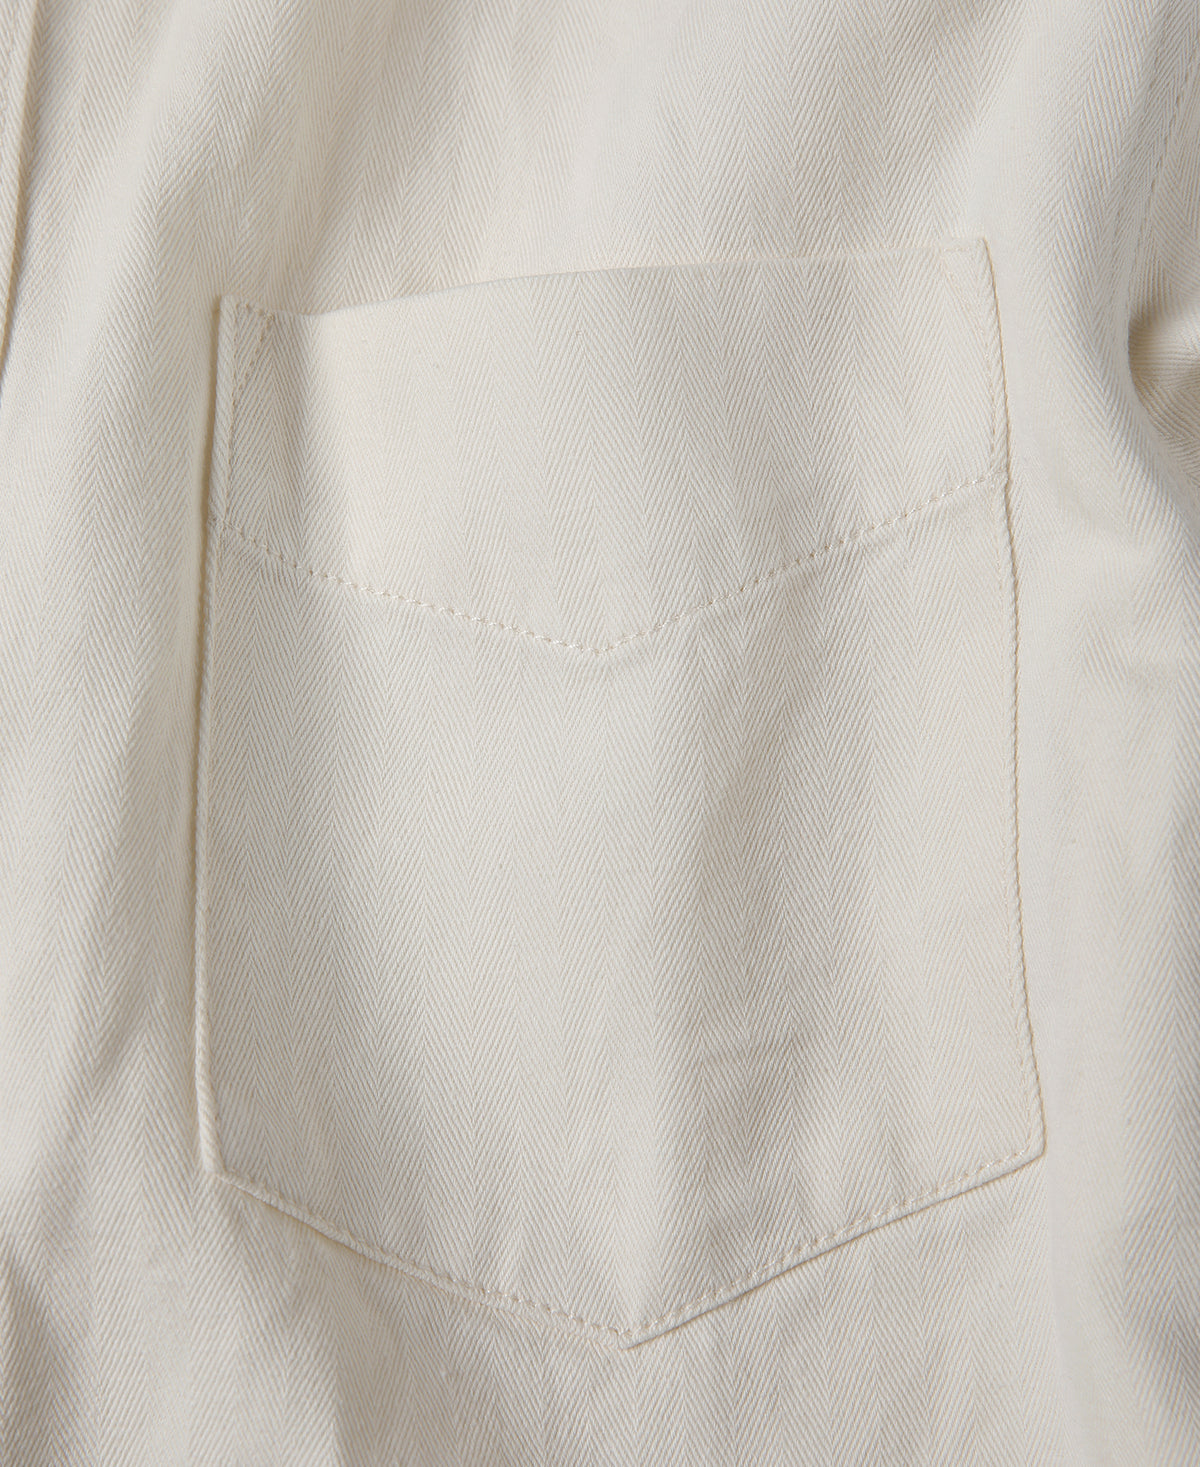 White Cotton-Linen Button-Down Shirt